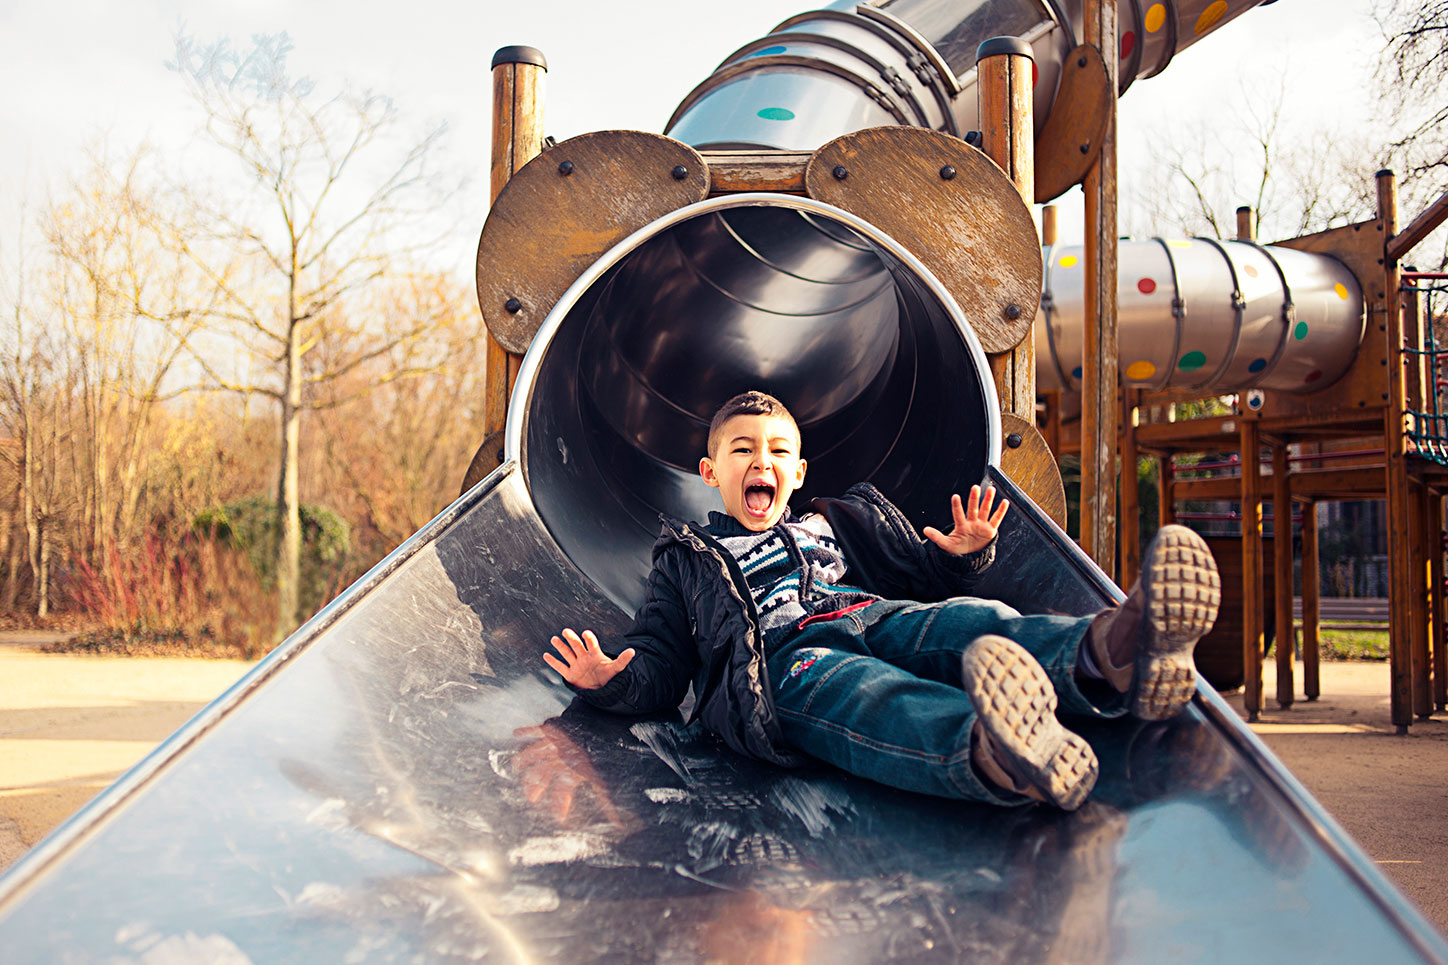 Kid on a playground slide